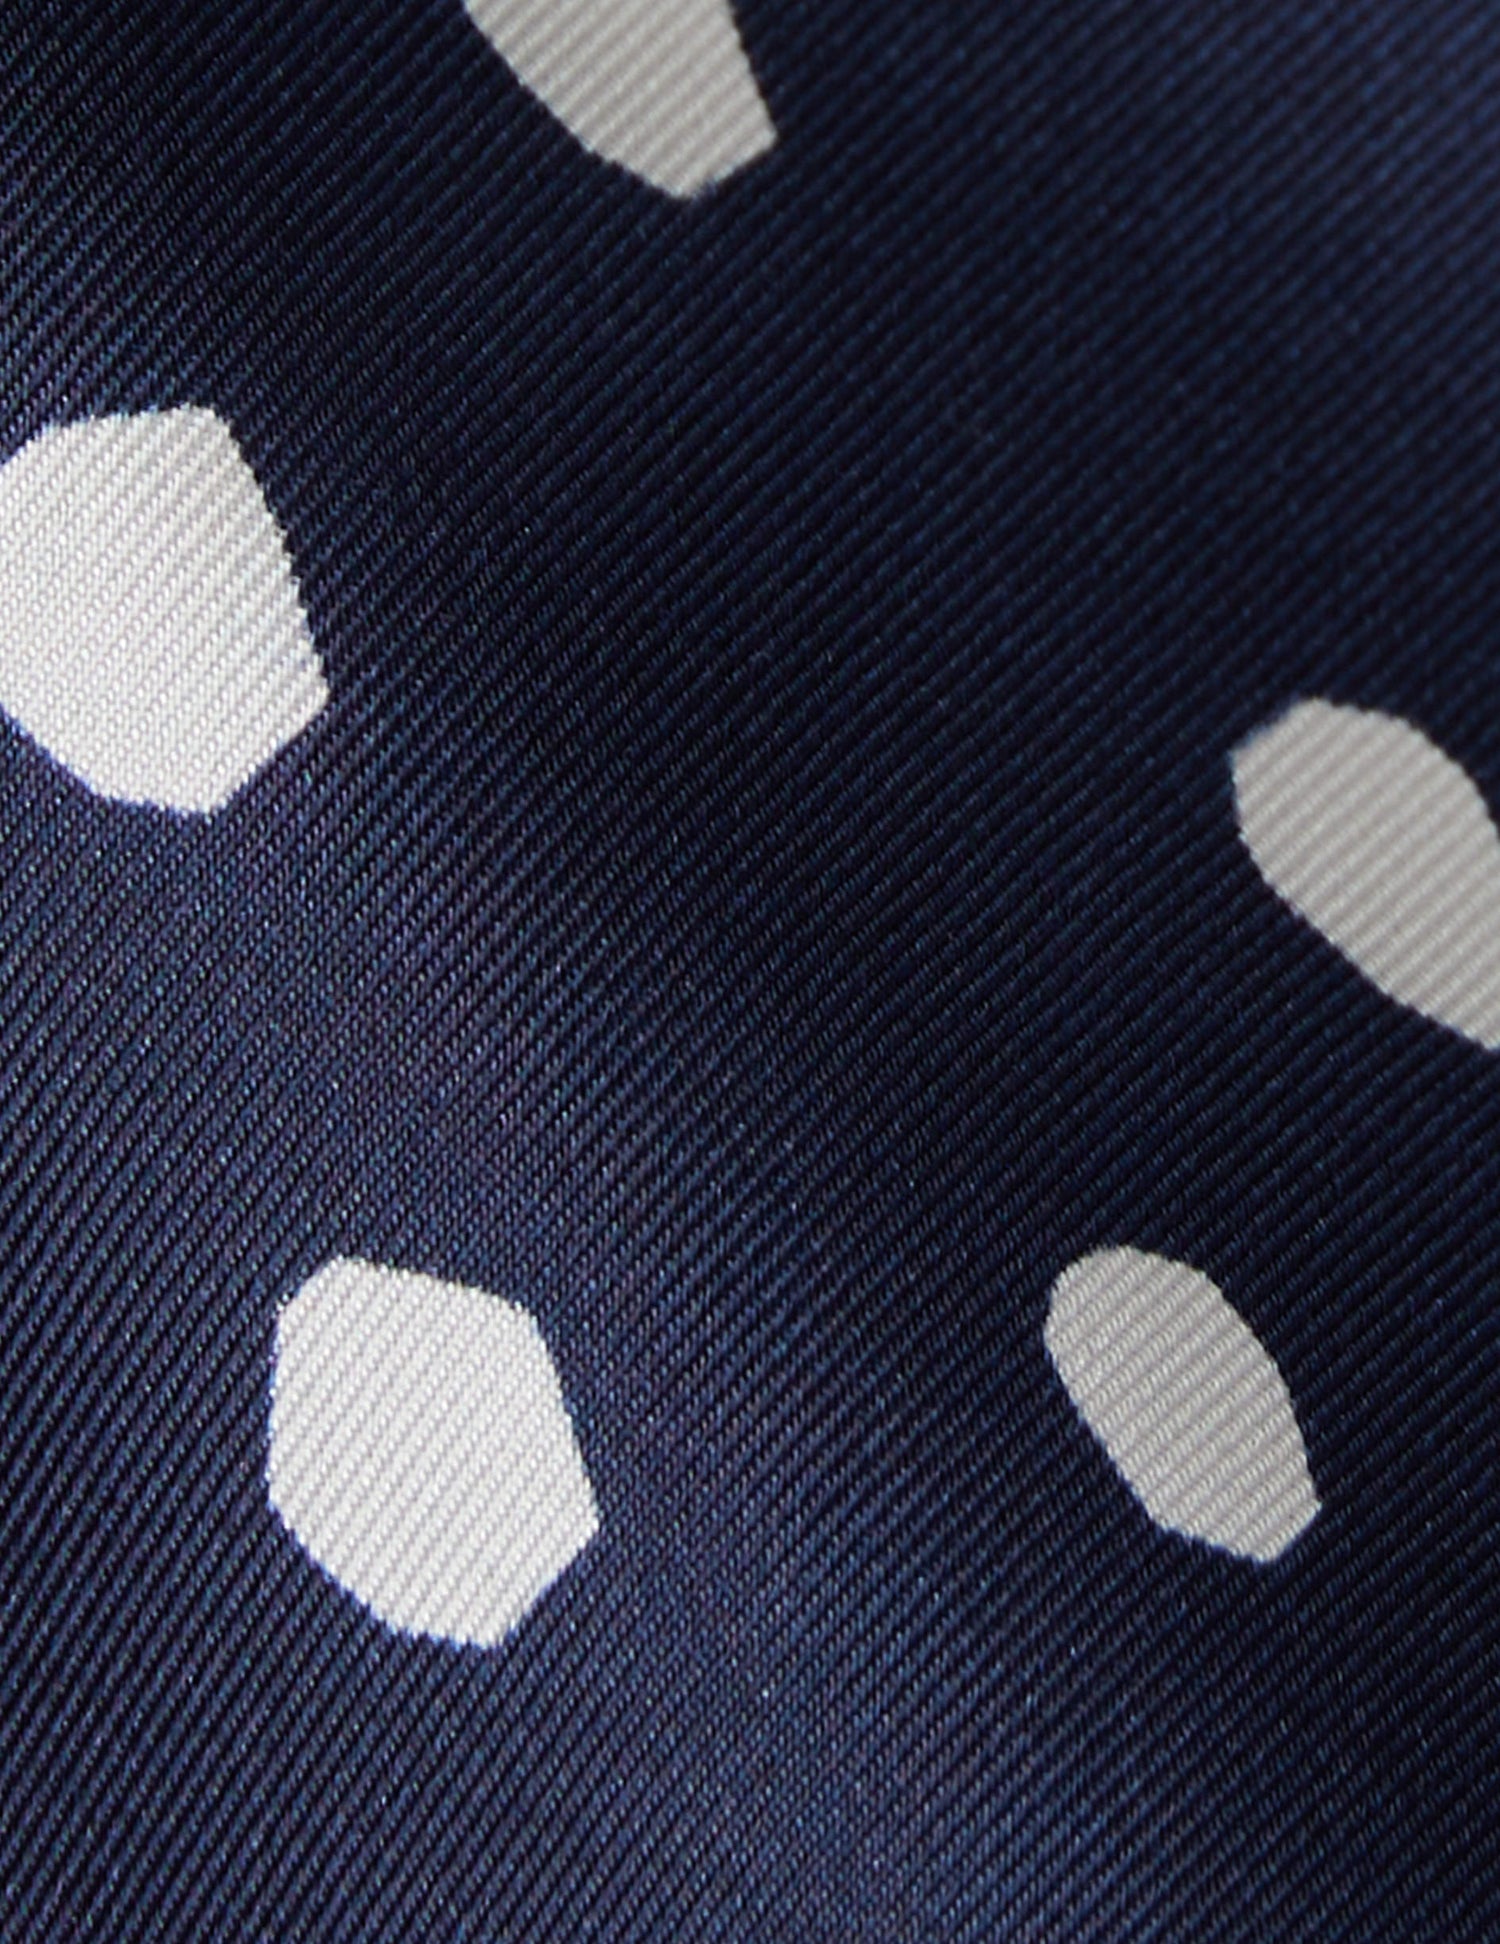 Ilena Hidden button placket navy blue shirt - Twill - Rising shawl Collar#5